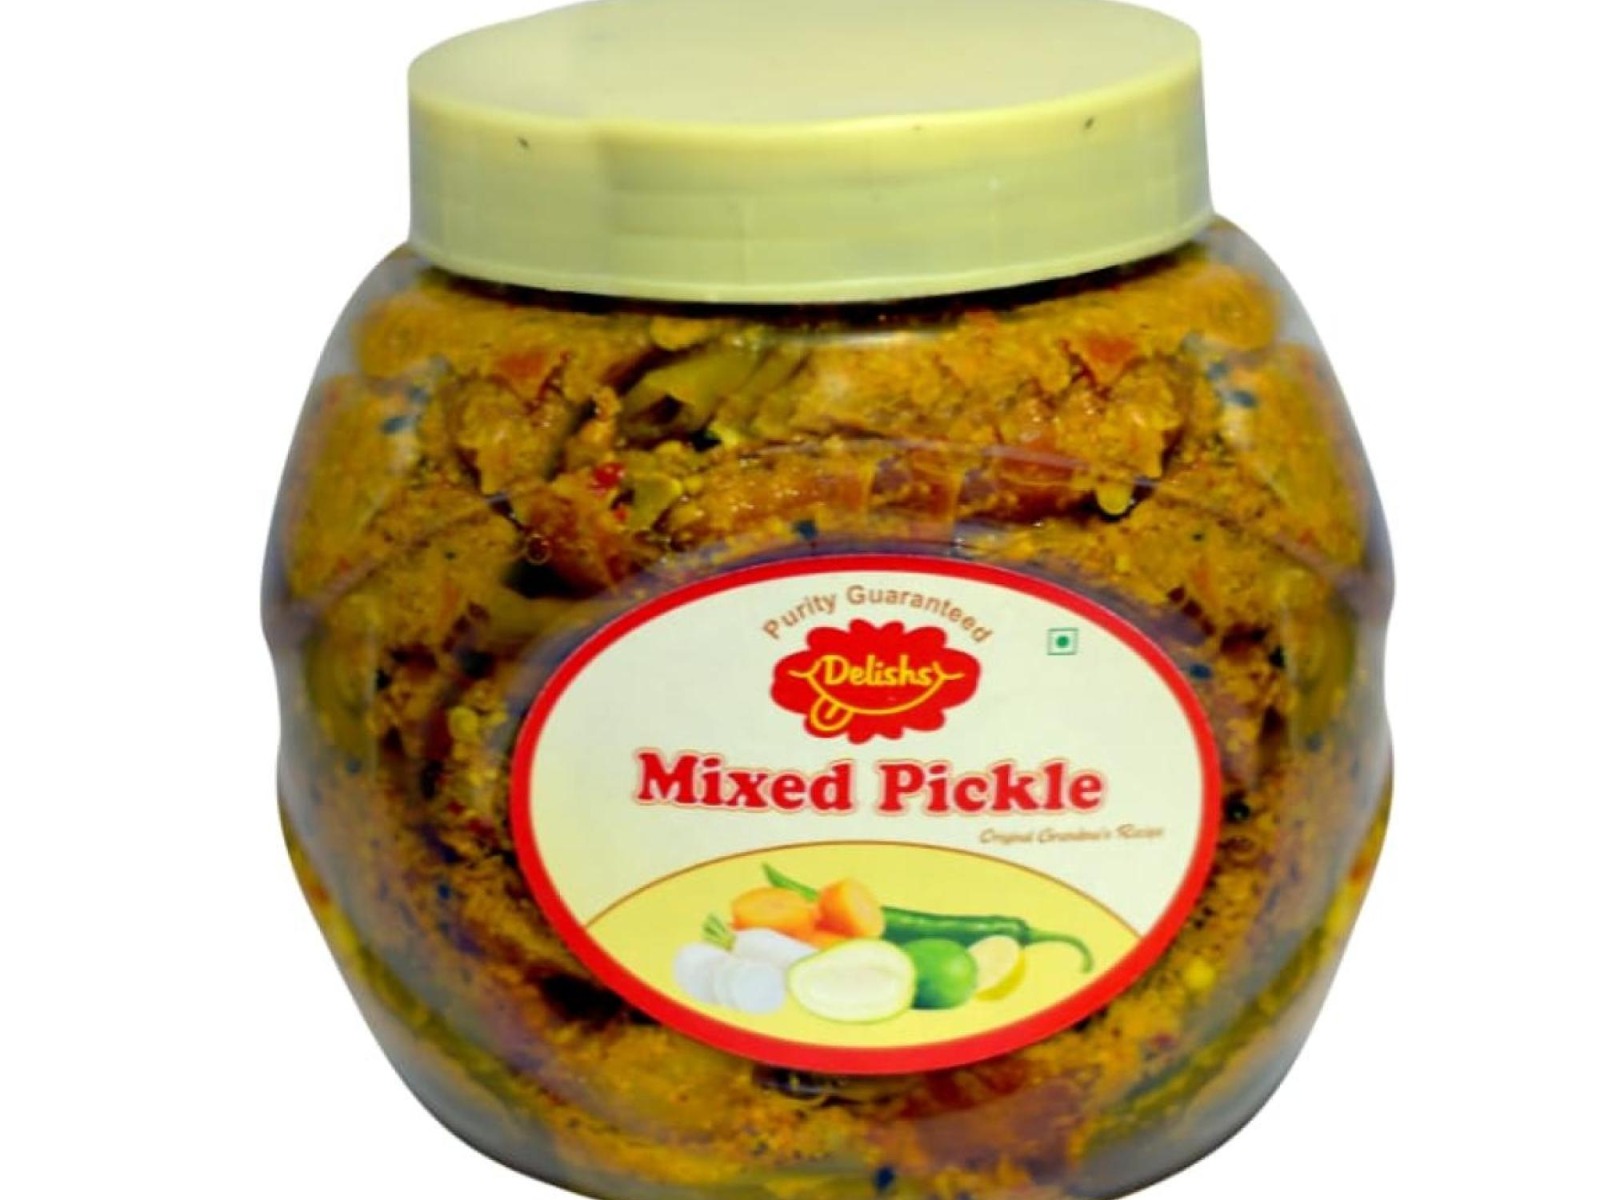 Delishs Mixed Pickles